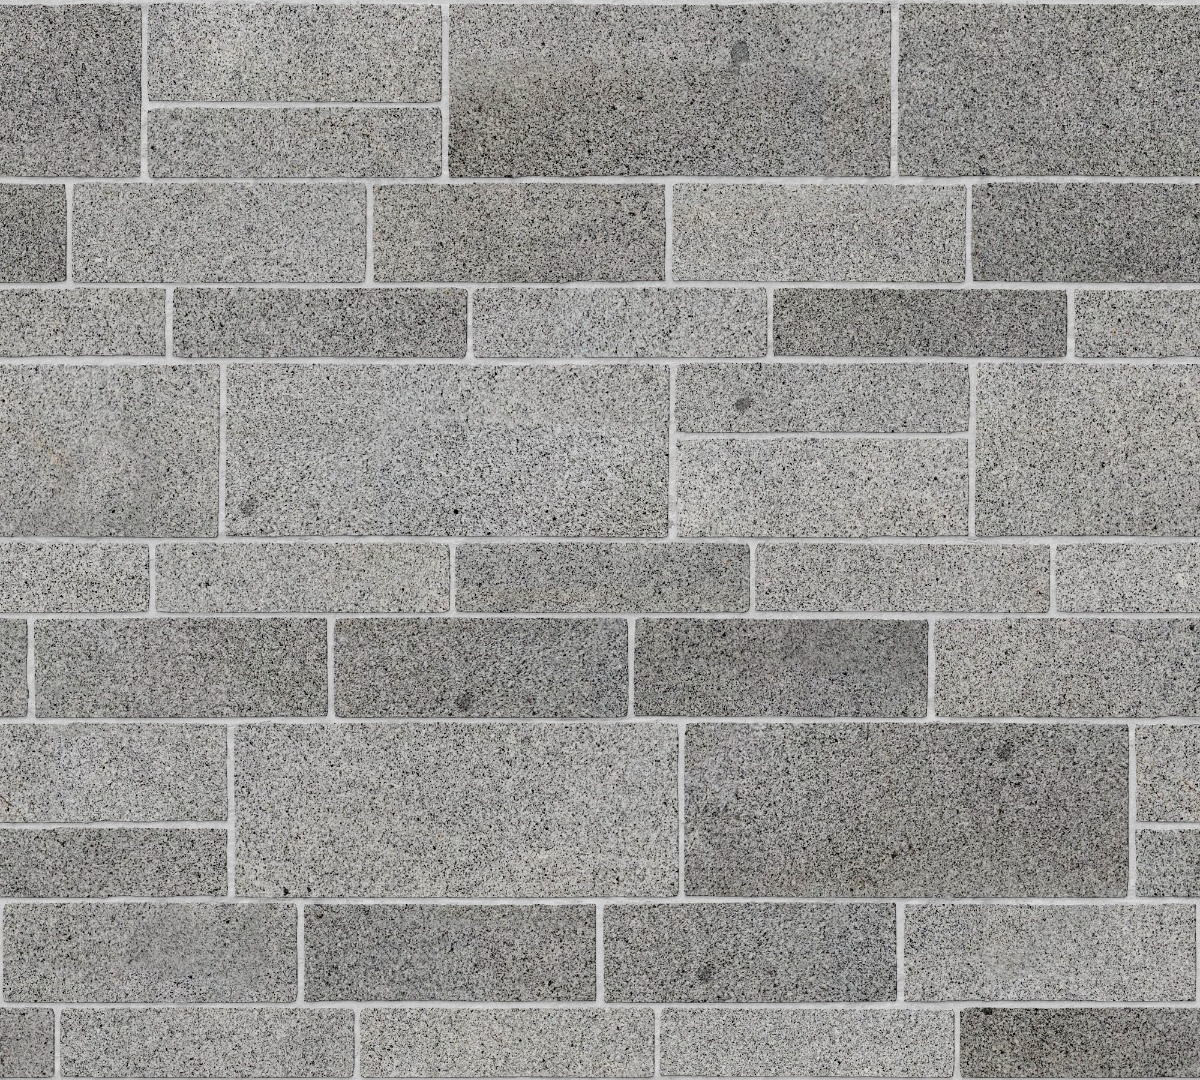 A seamless stone texture with granite blocks arranged in a Broken Range Ashlar pattern